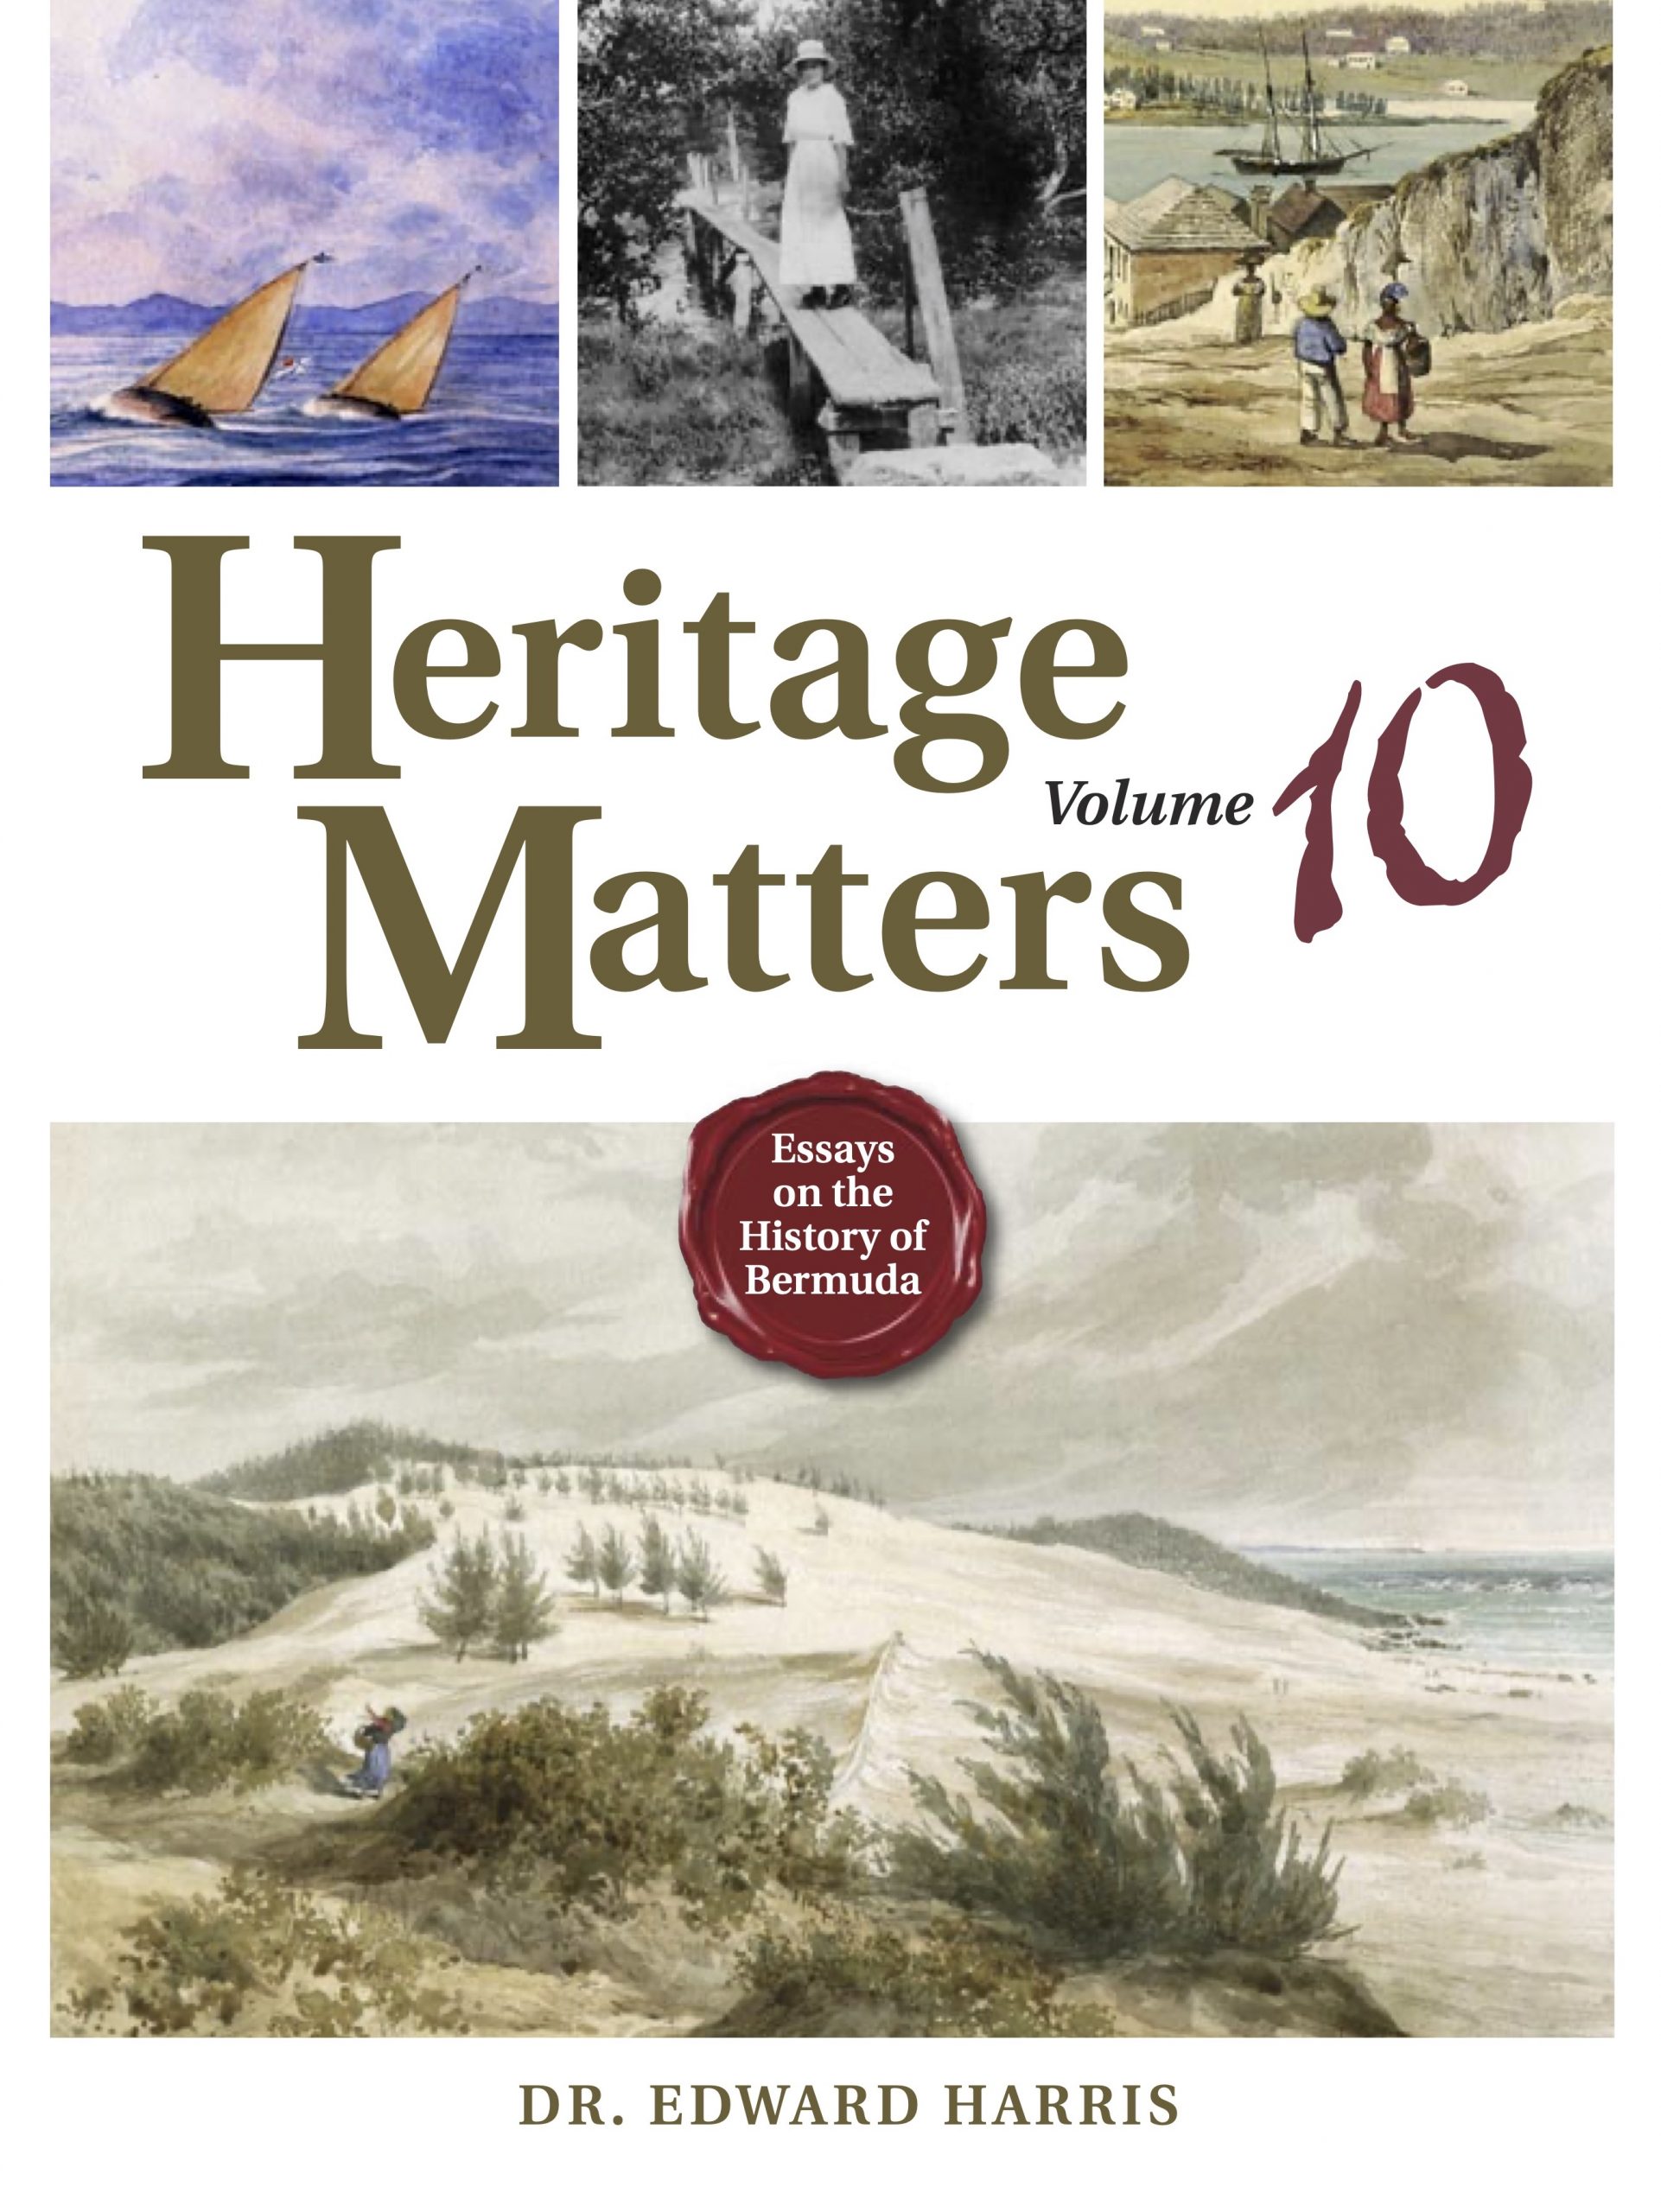 Heritage Matters Volume 10